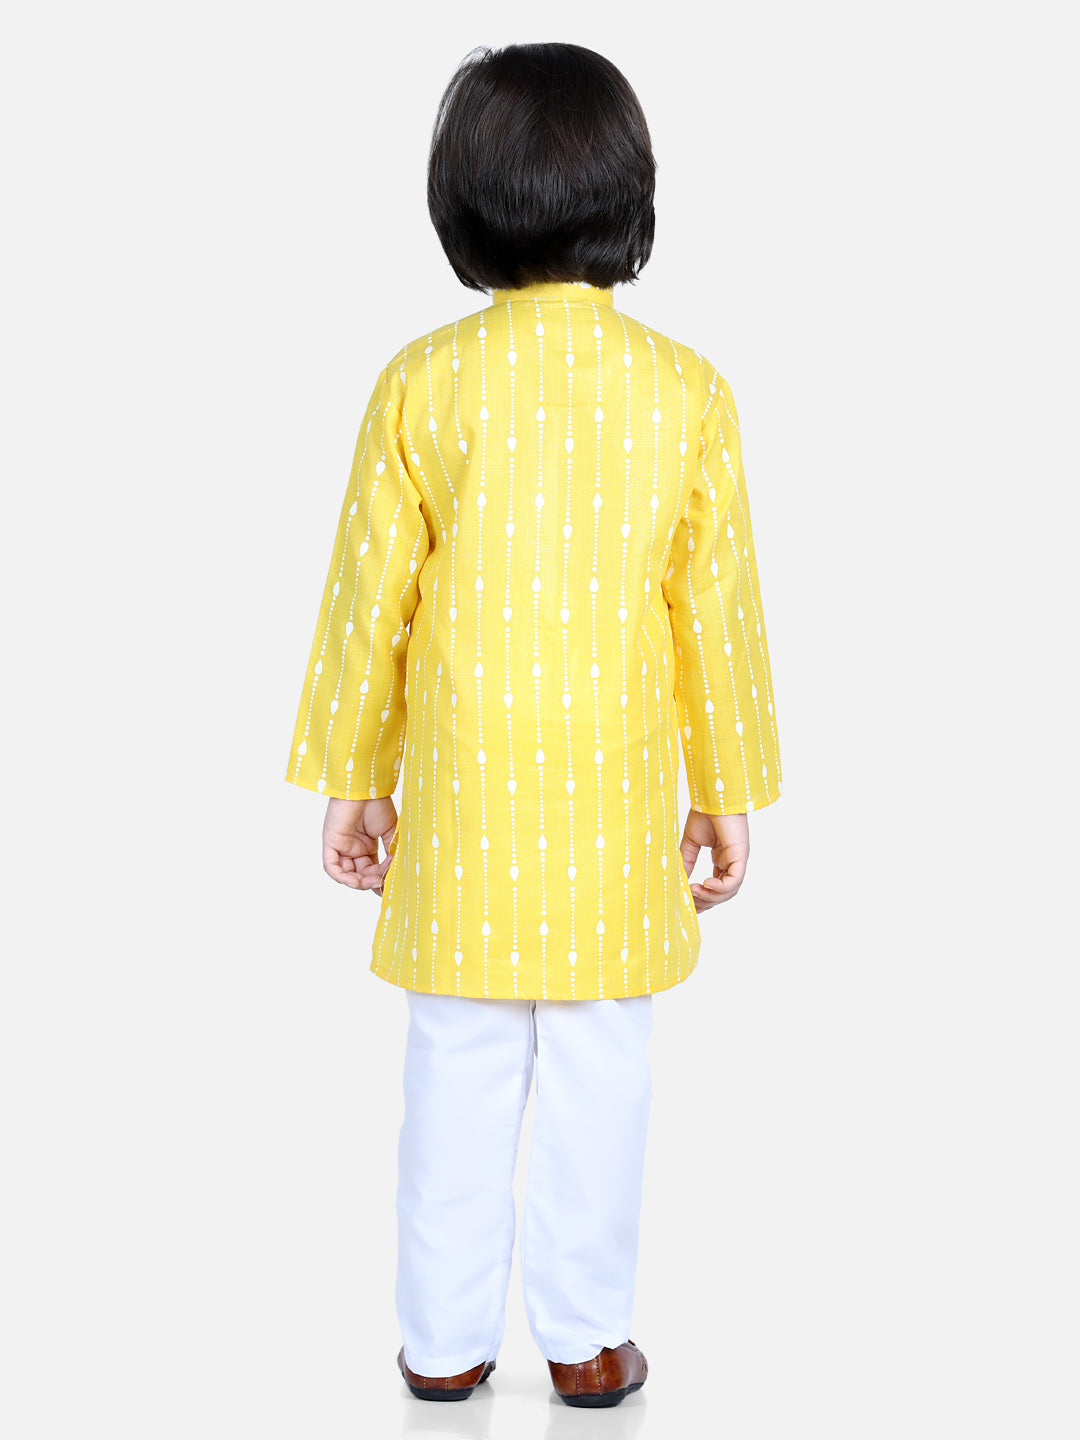 BownBee Printed Full Sleeves Dotted Lines Printed Kurta and Pajama Yellow